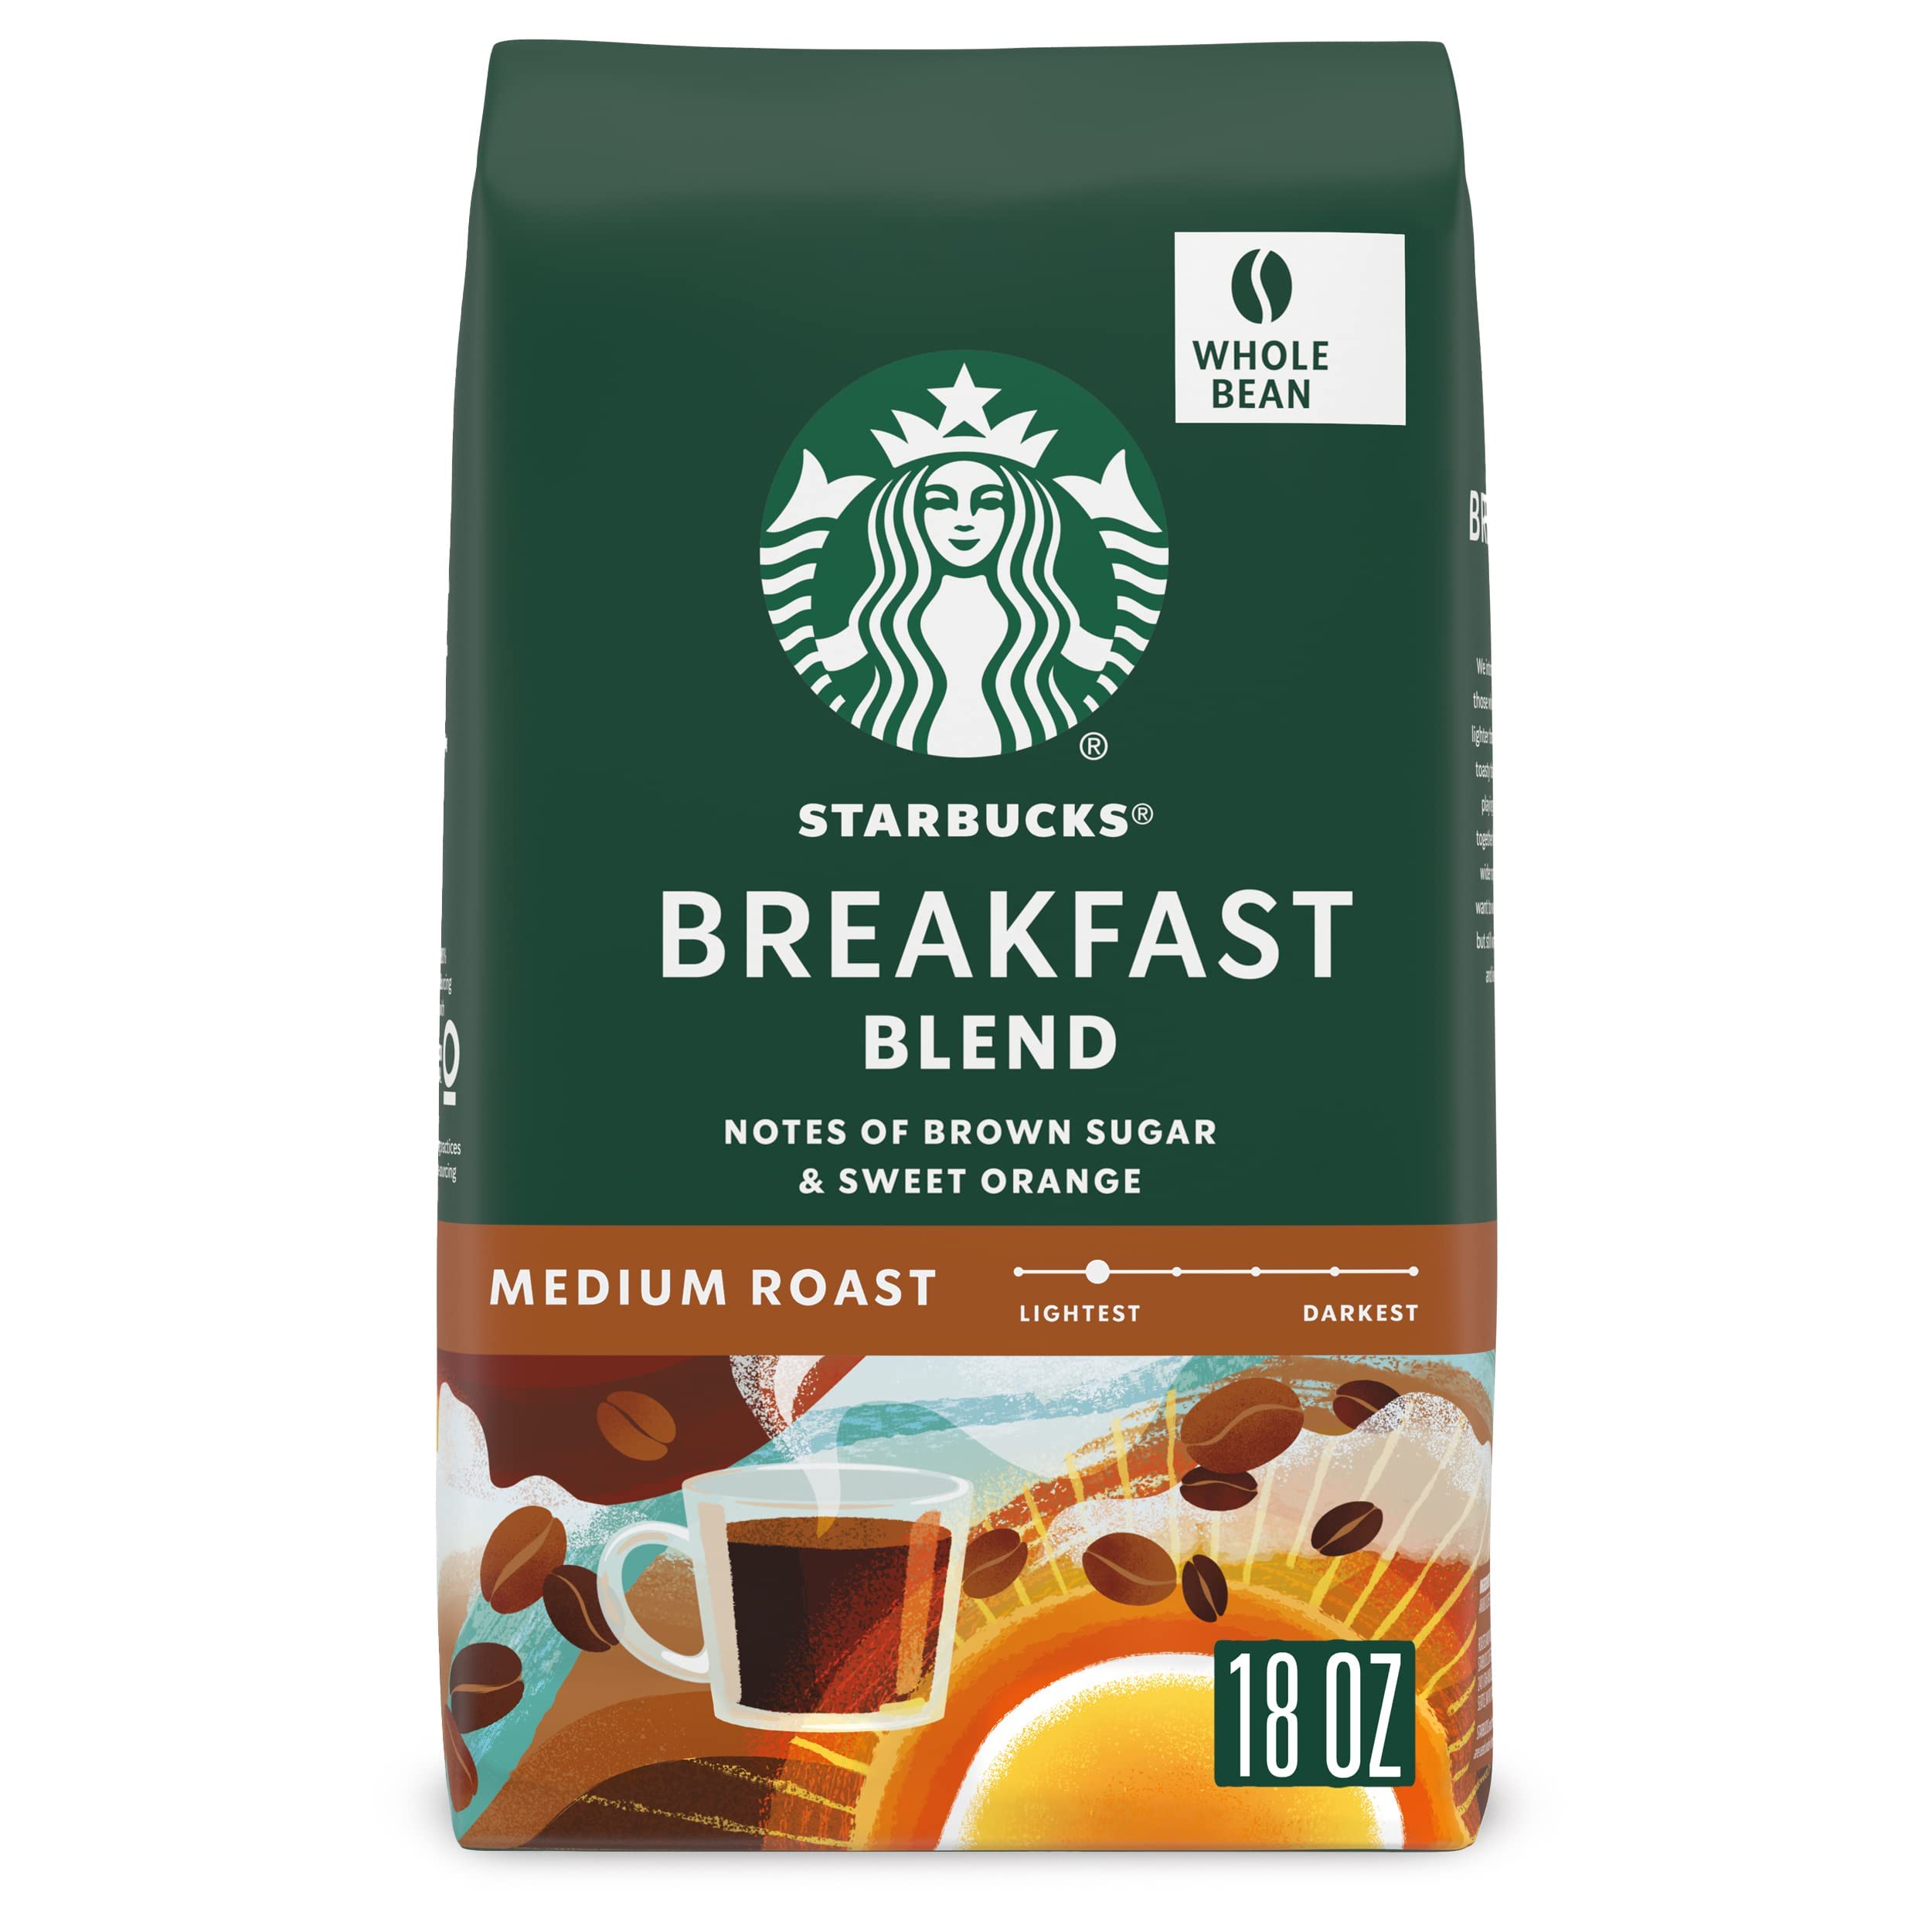 18-Oz Starbucks Medium Roast Whole Bean Coffee (Breakfast Blend) $6.10 w/ S&S + Free Shipping w/ Prime or on $25+